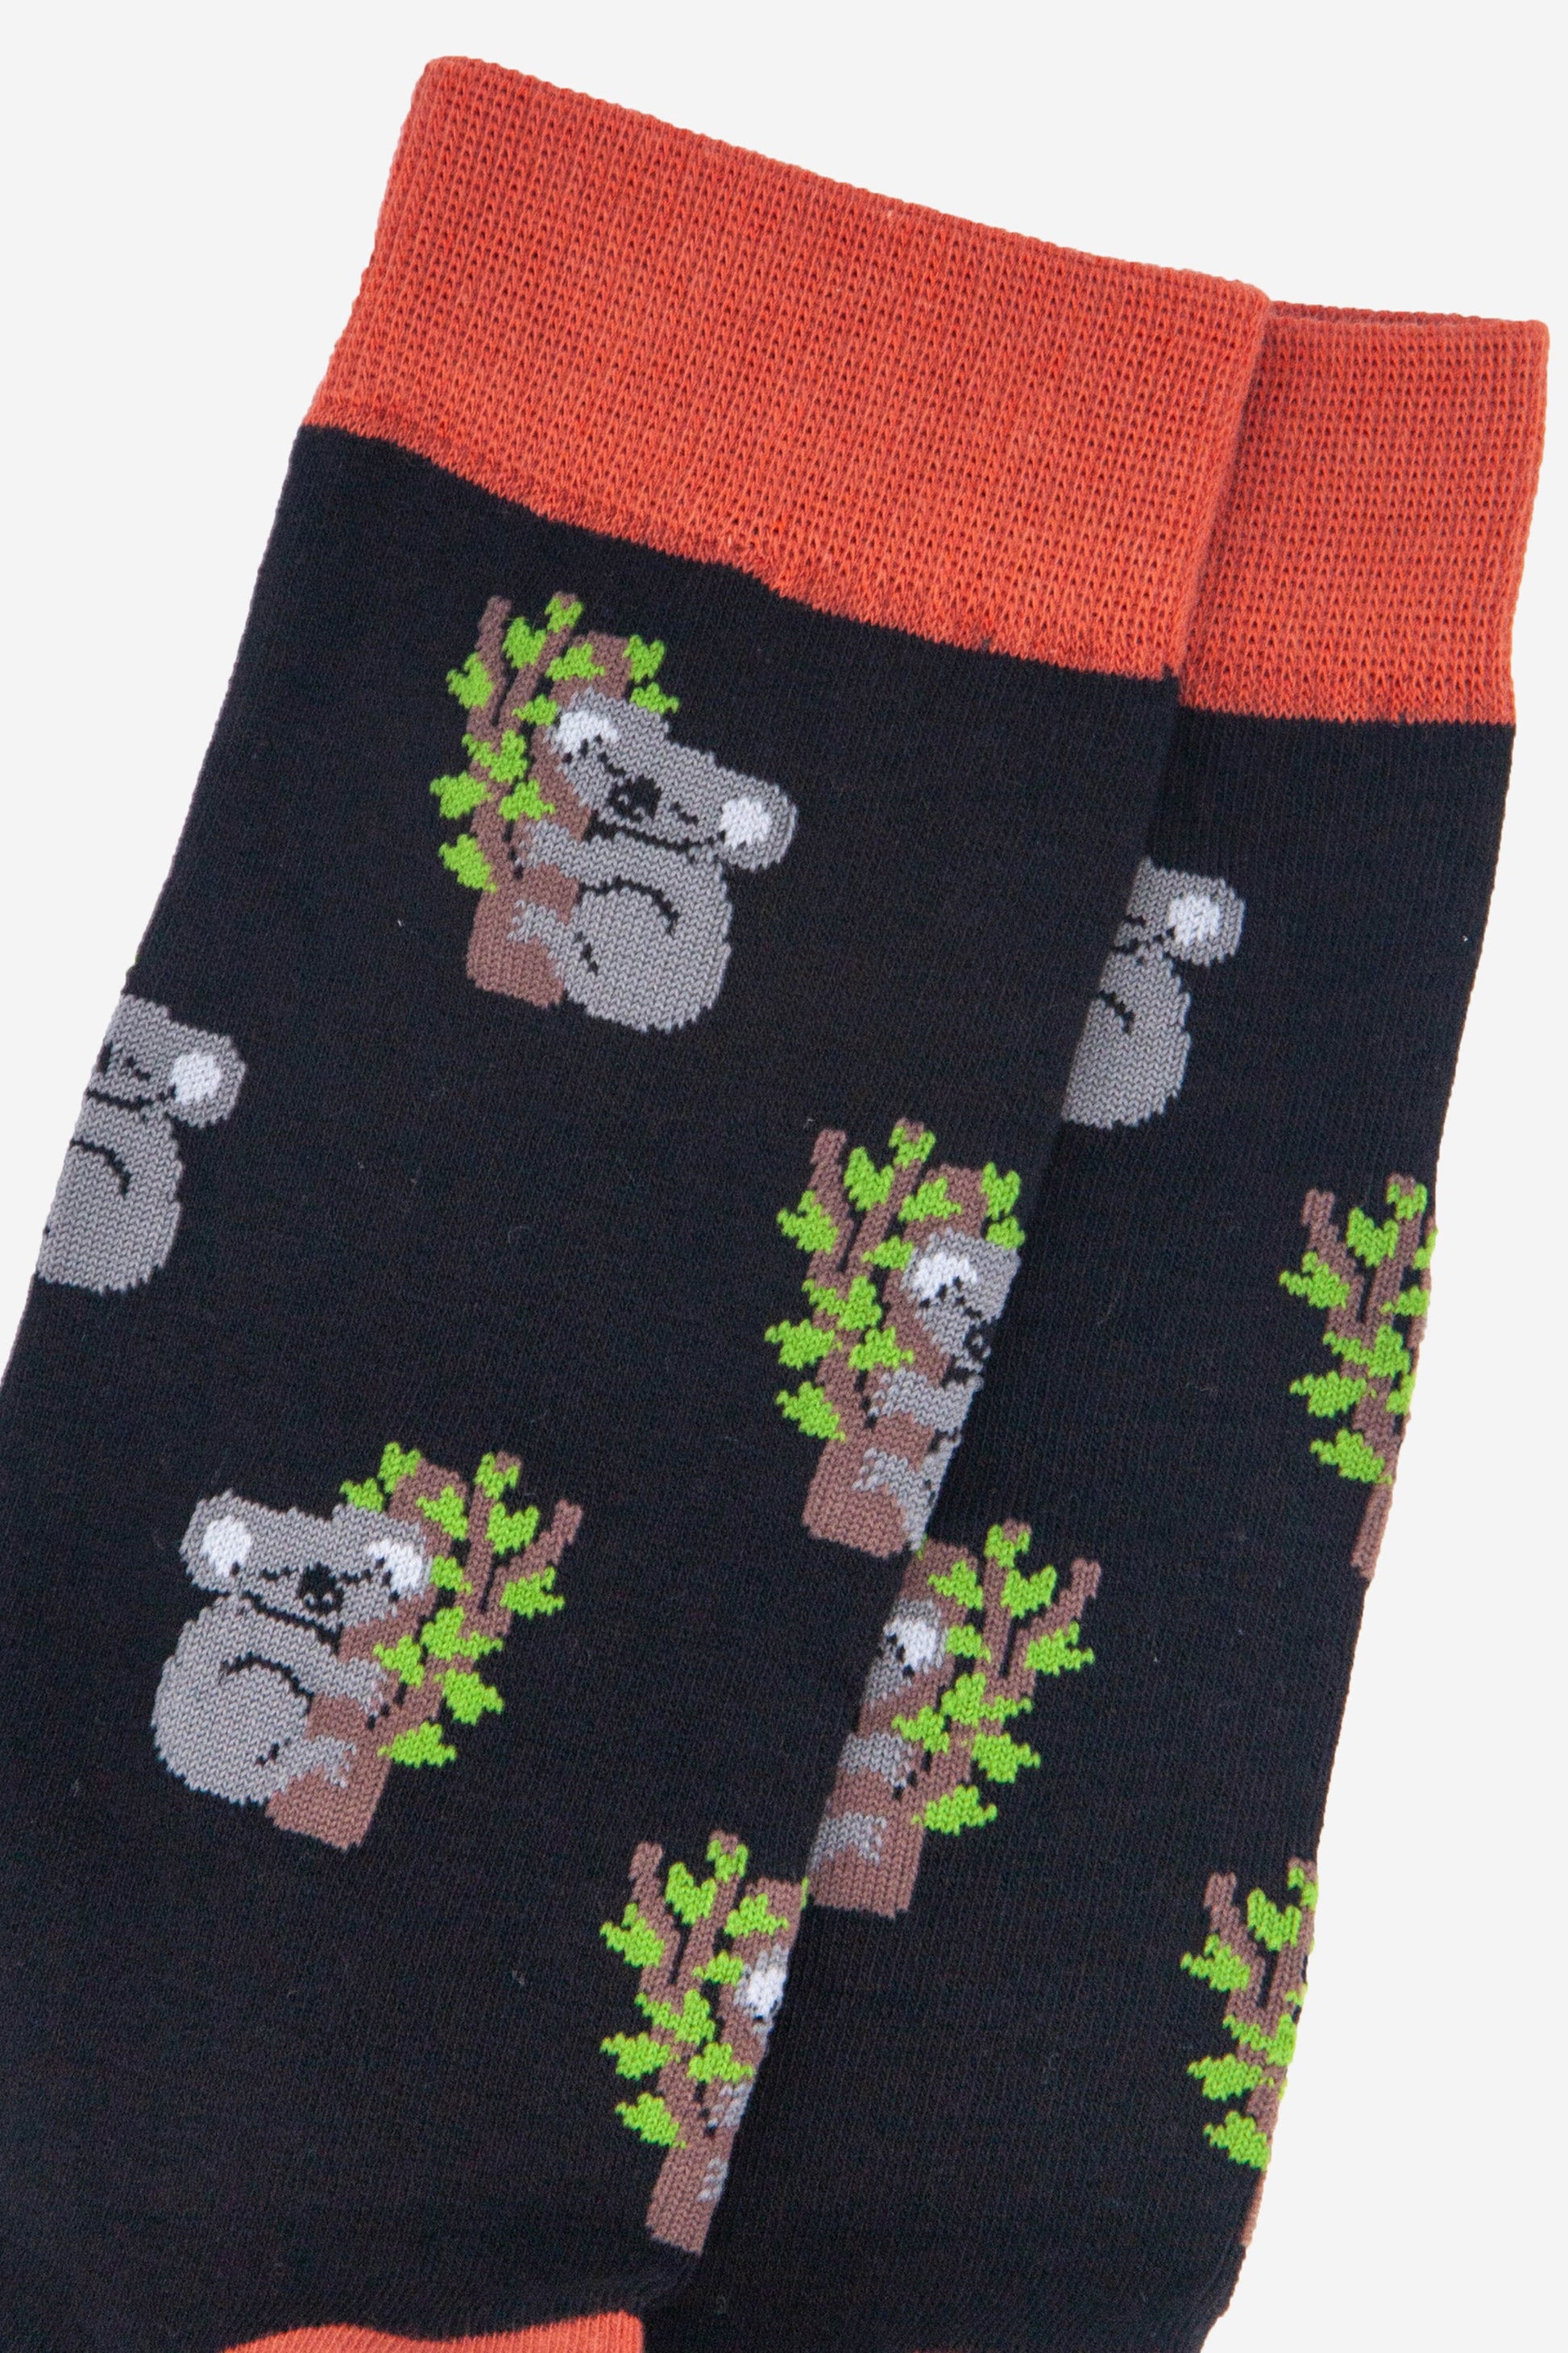 close up of the sleeping koala pattern on the bamboo socks